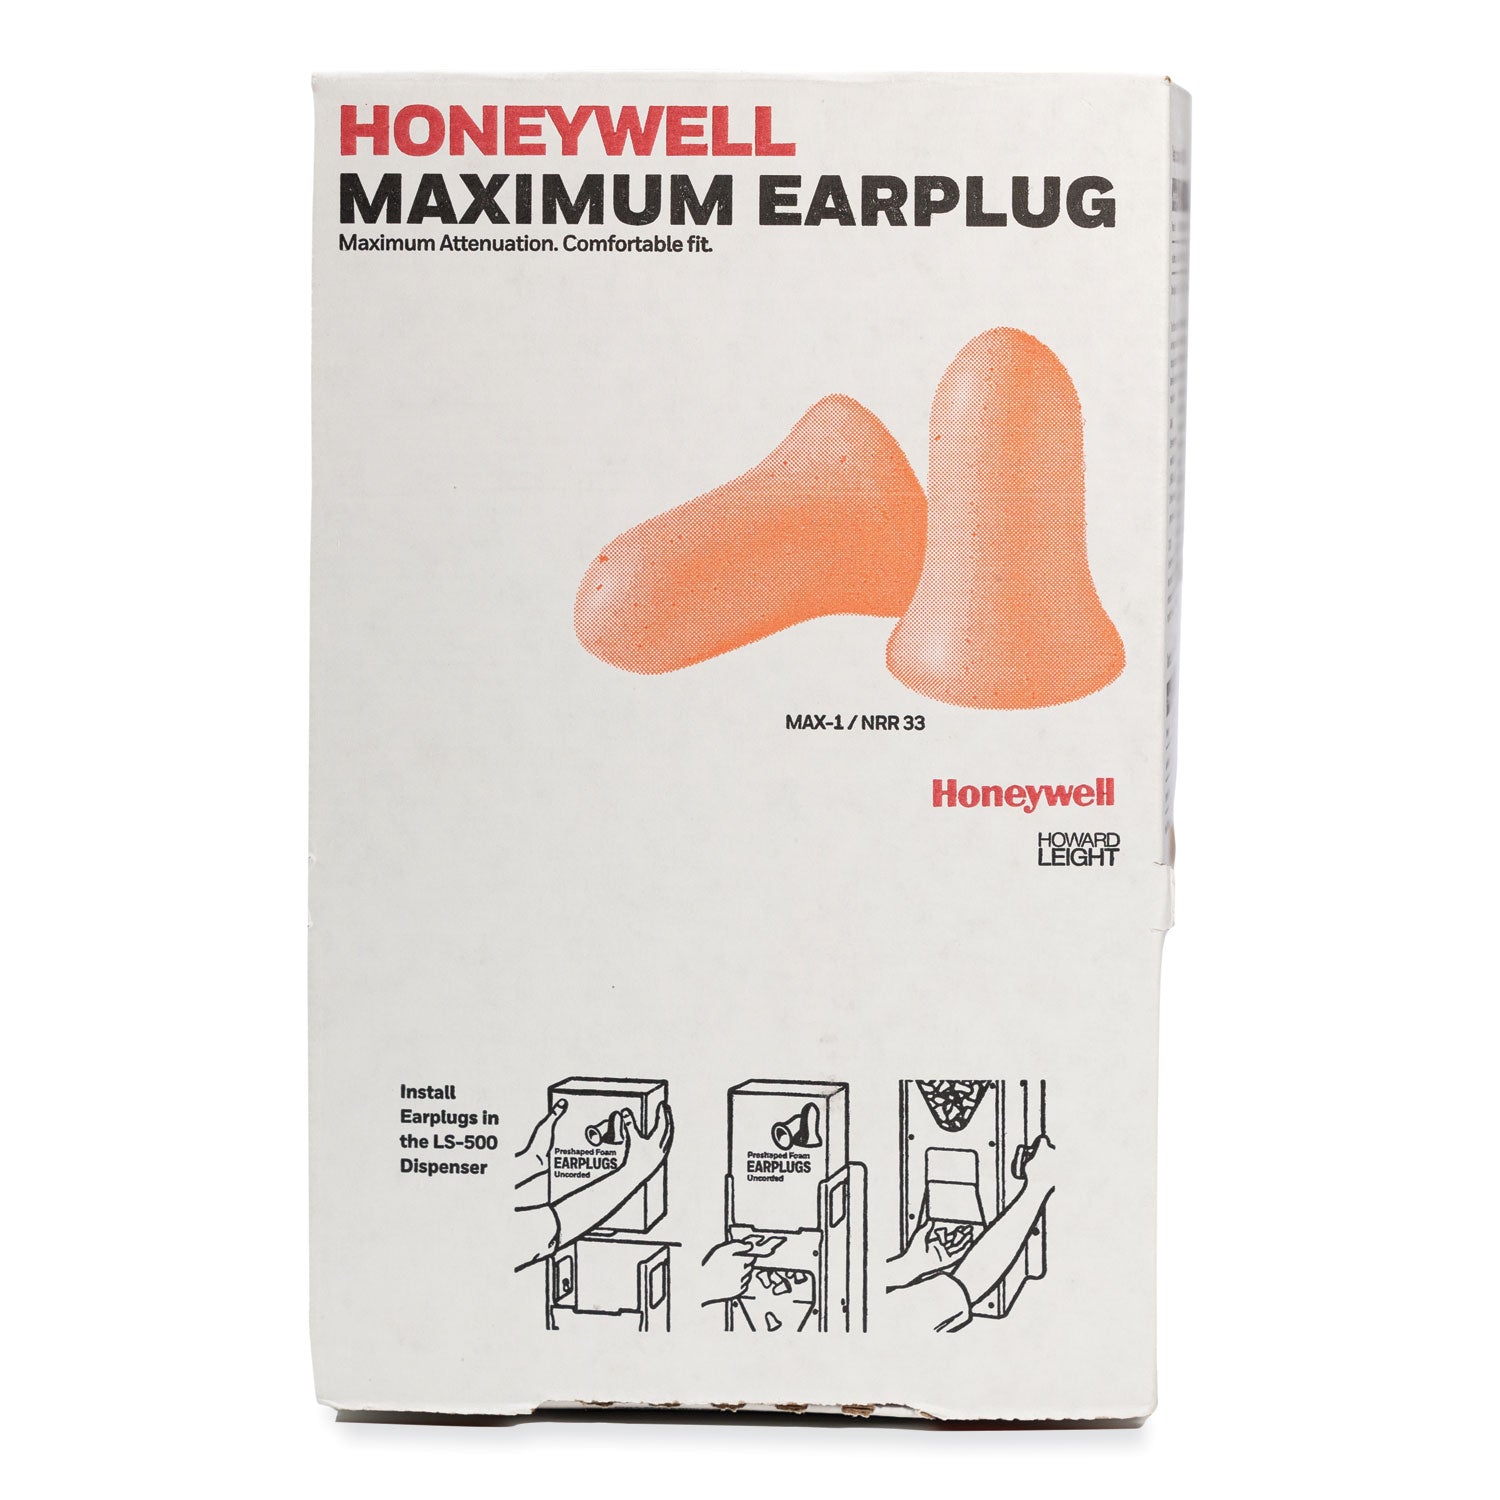 MAXIMUM Single-Use Earplugs, Cordless, 33NRR, Coral, 200 Pairs - 